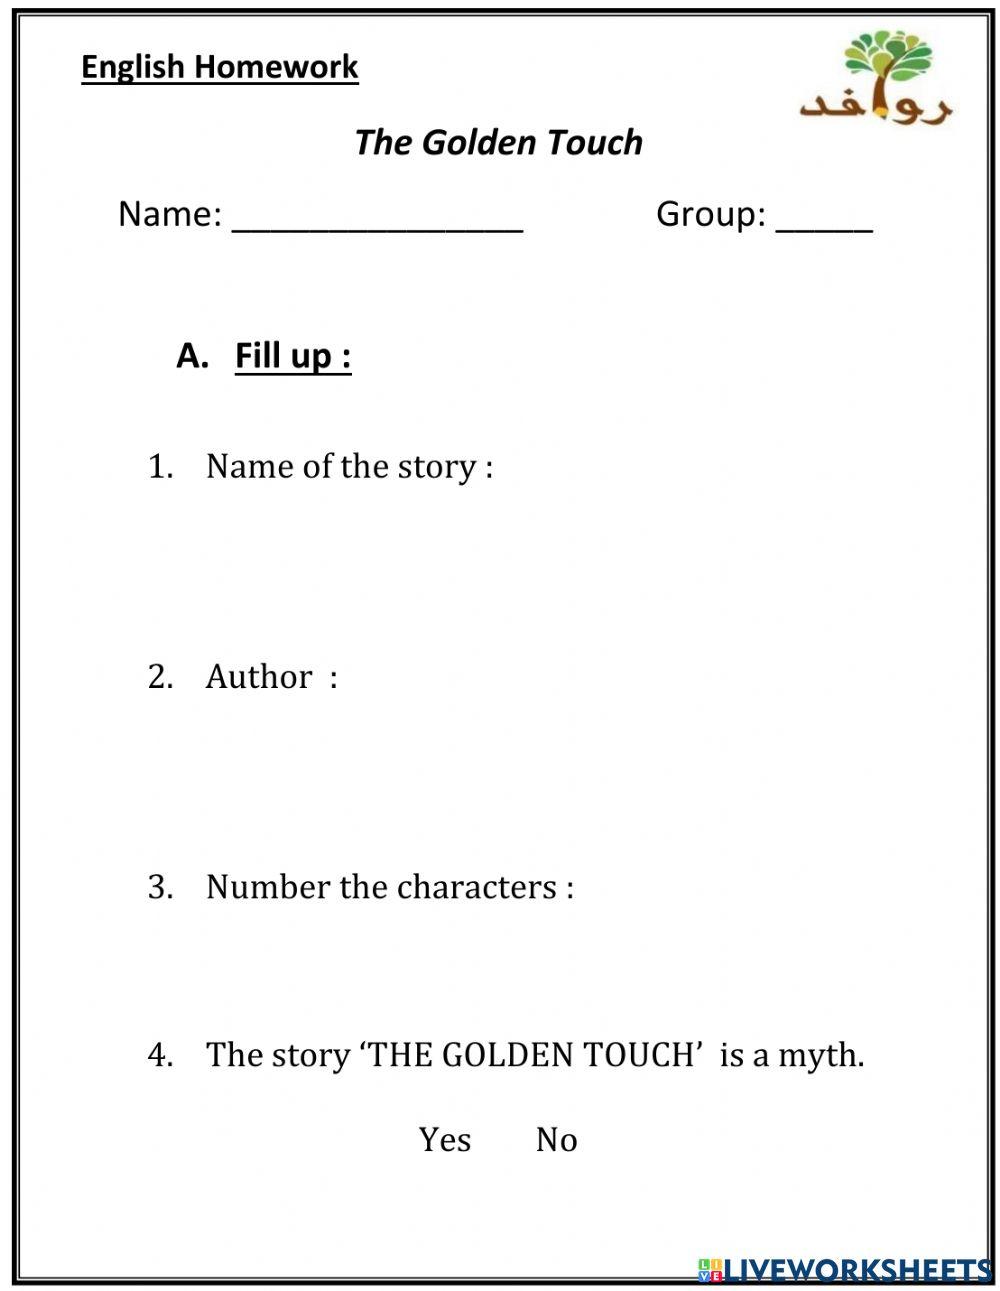 The golden touch- assessment